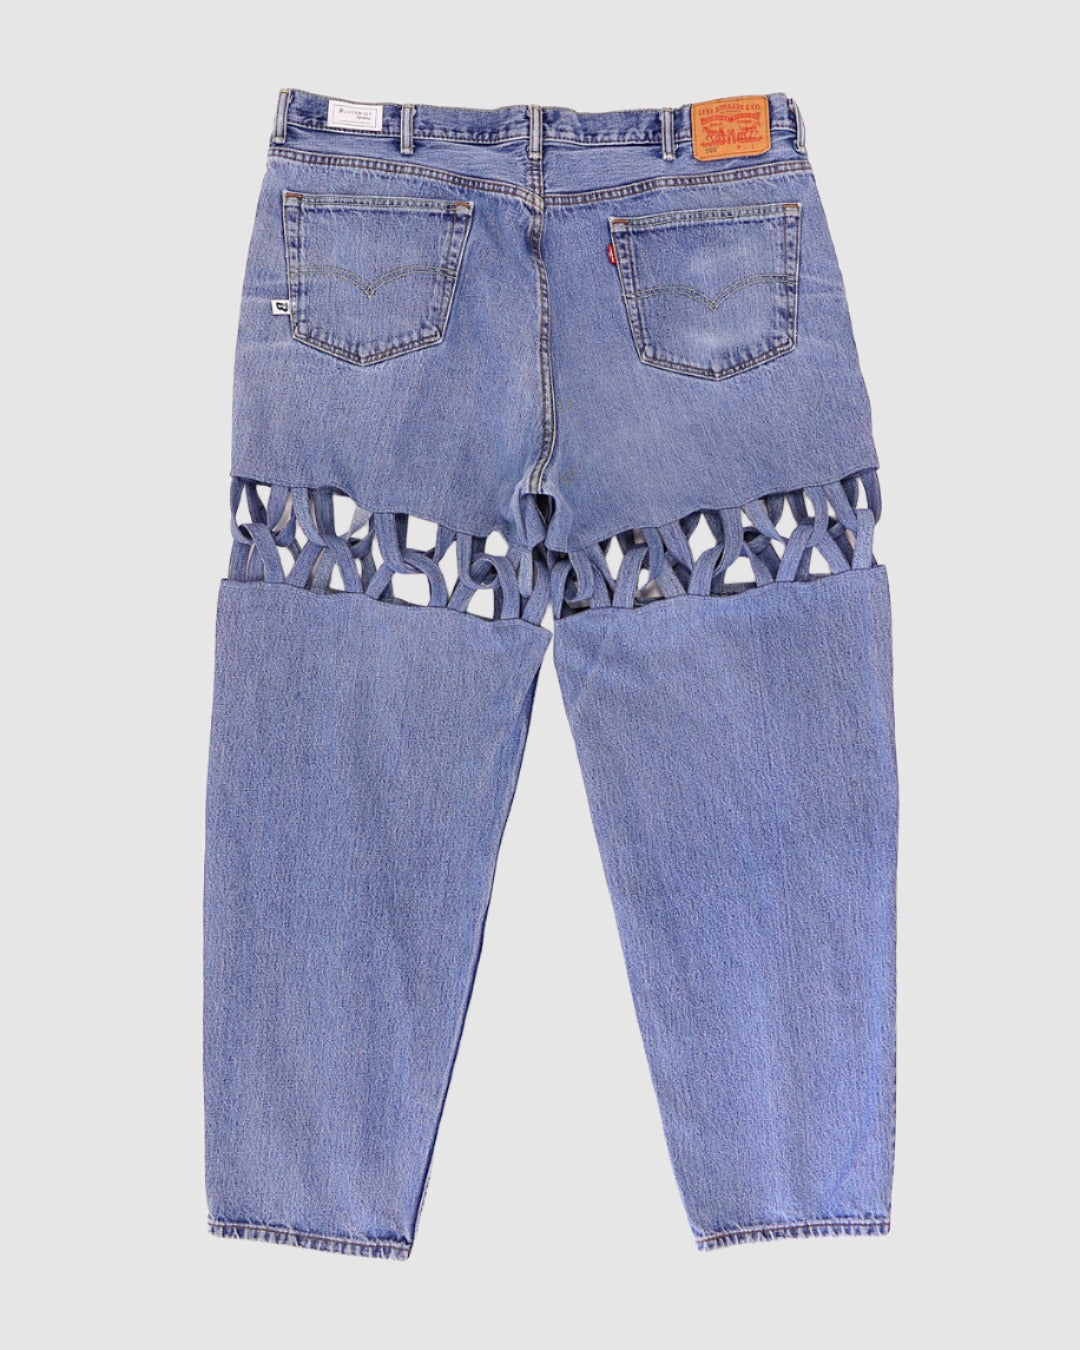 Criss Cross Jeans (size 22)